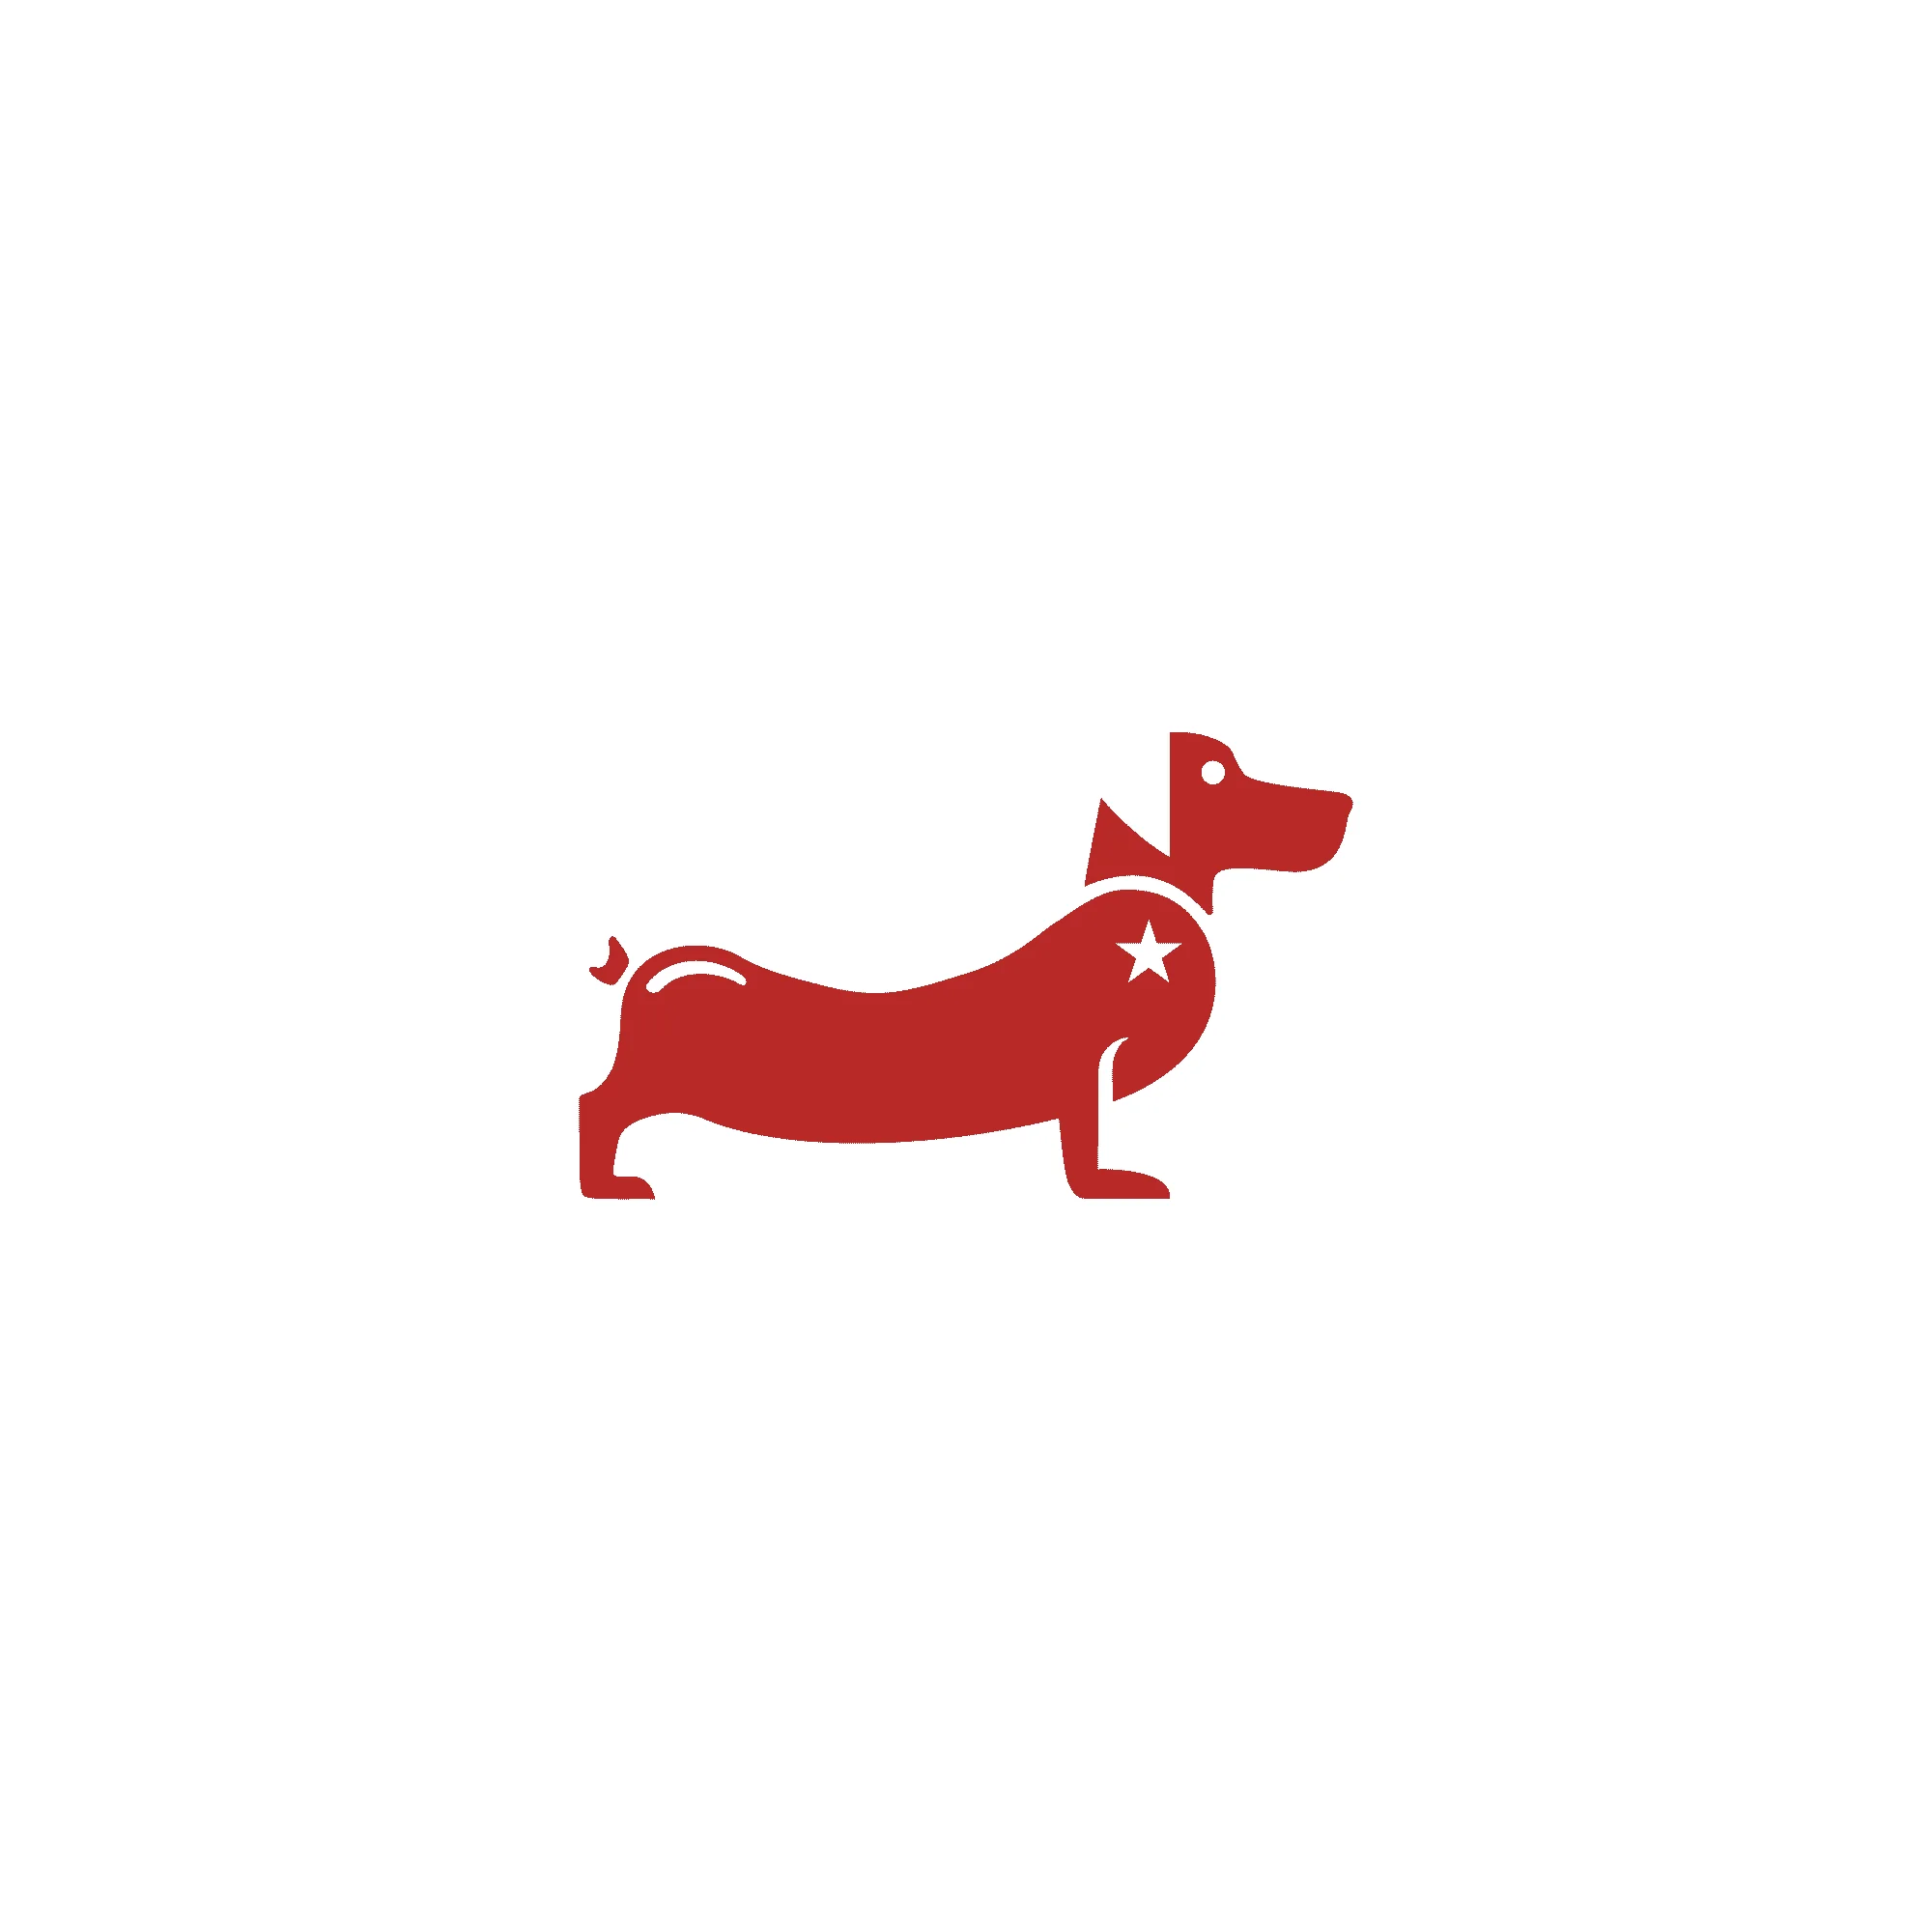 Branding logo design weiner dog as a hotdog, red